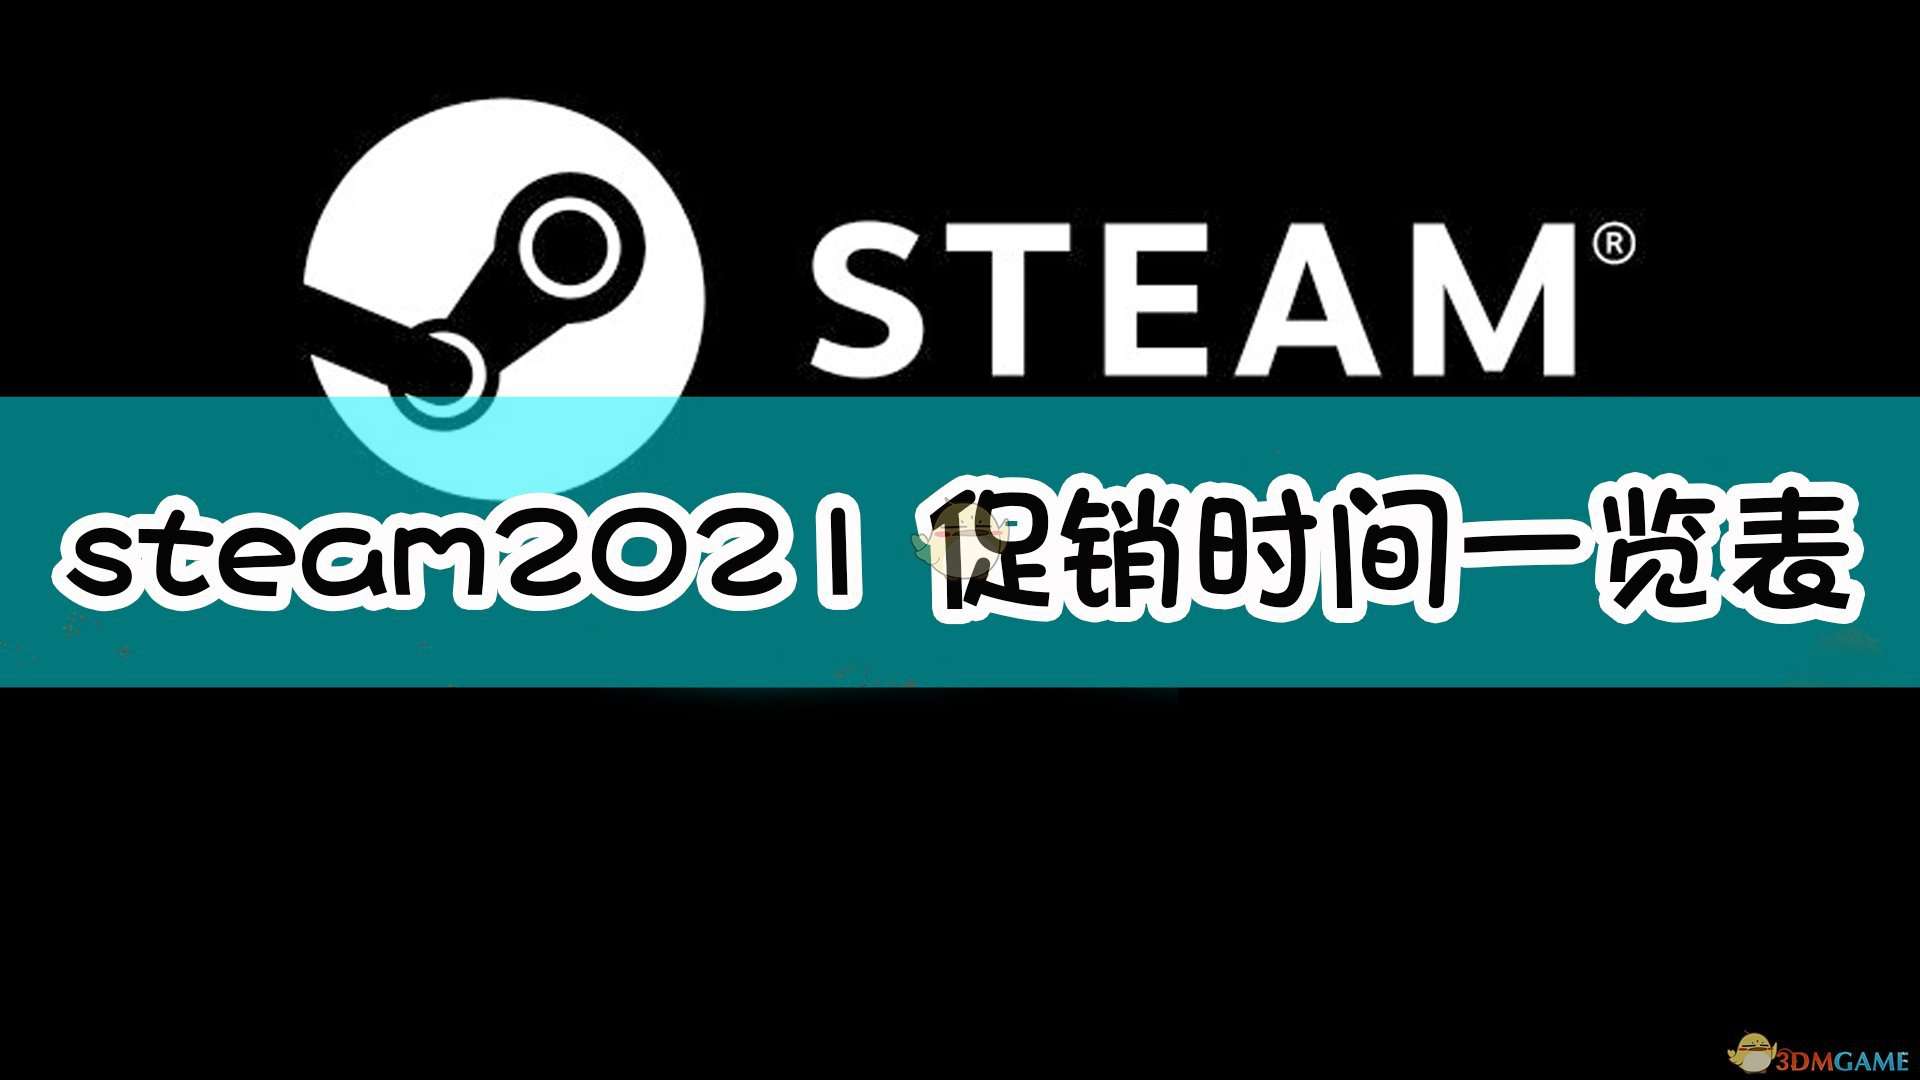 steam2021促销时间一览表